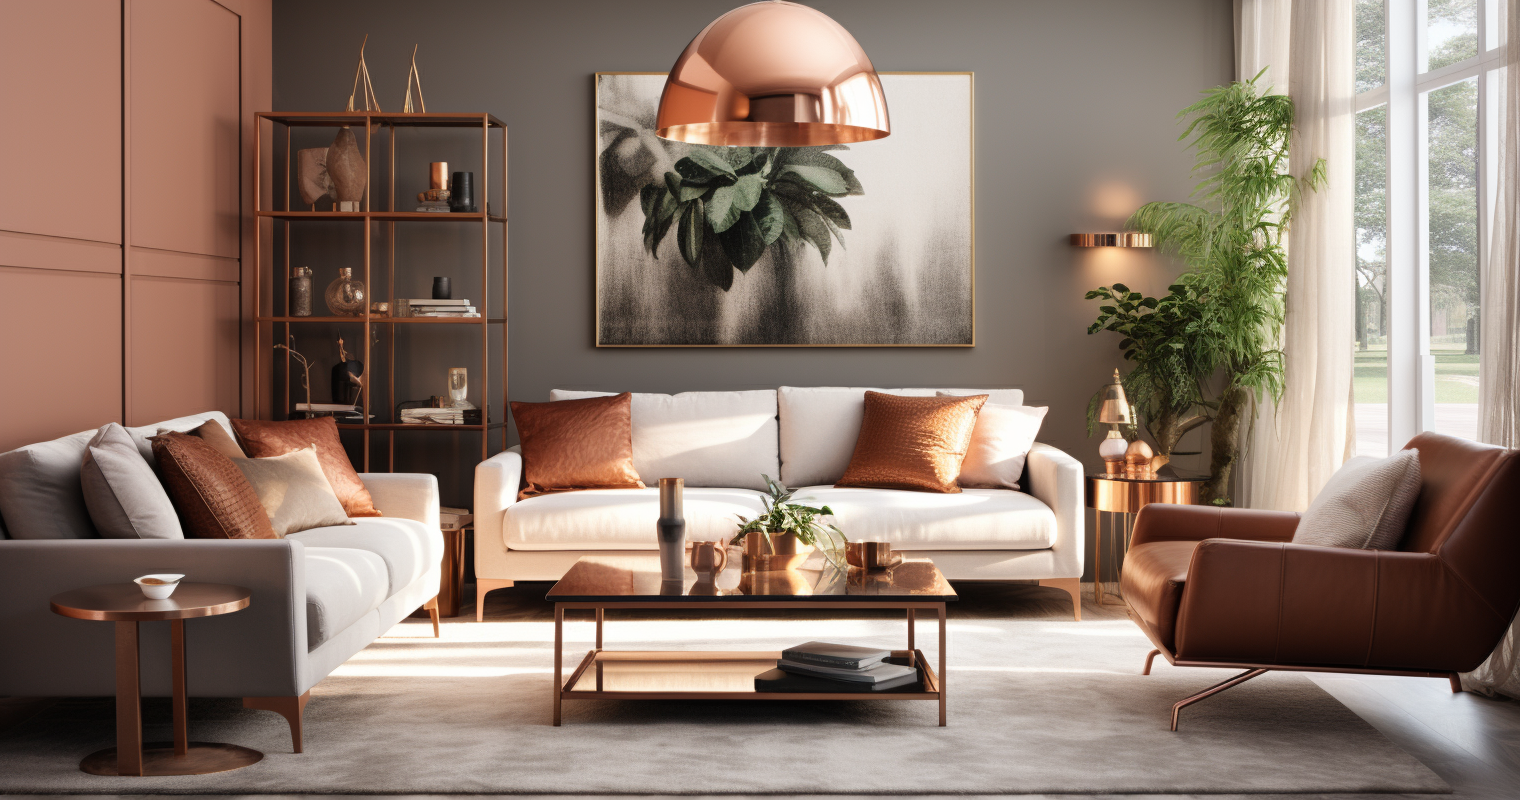 Incorporating Copper Elements in Interior Design